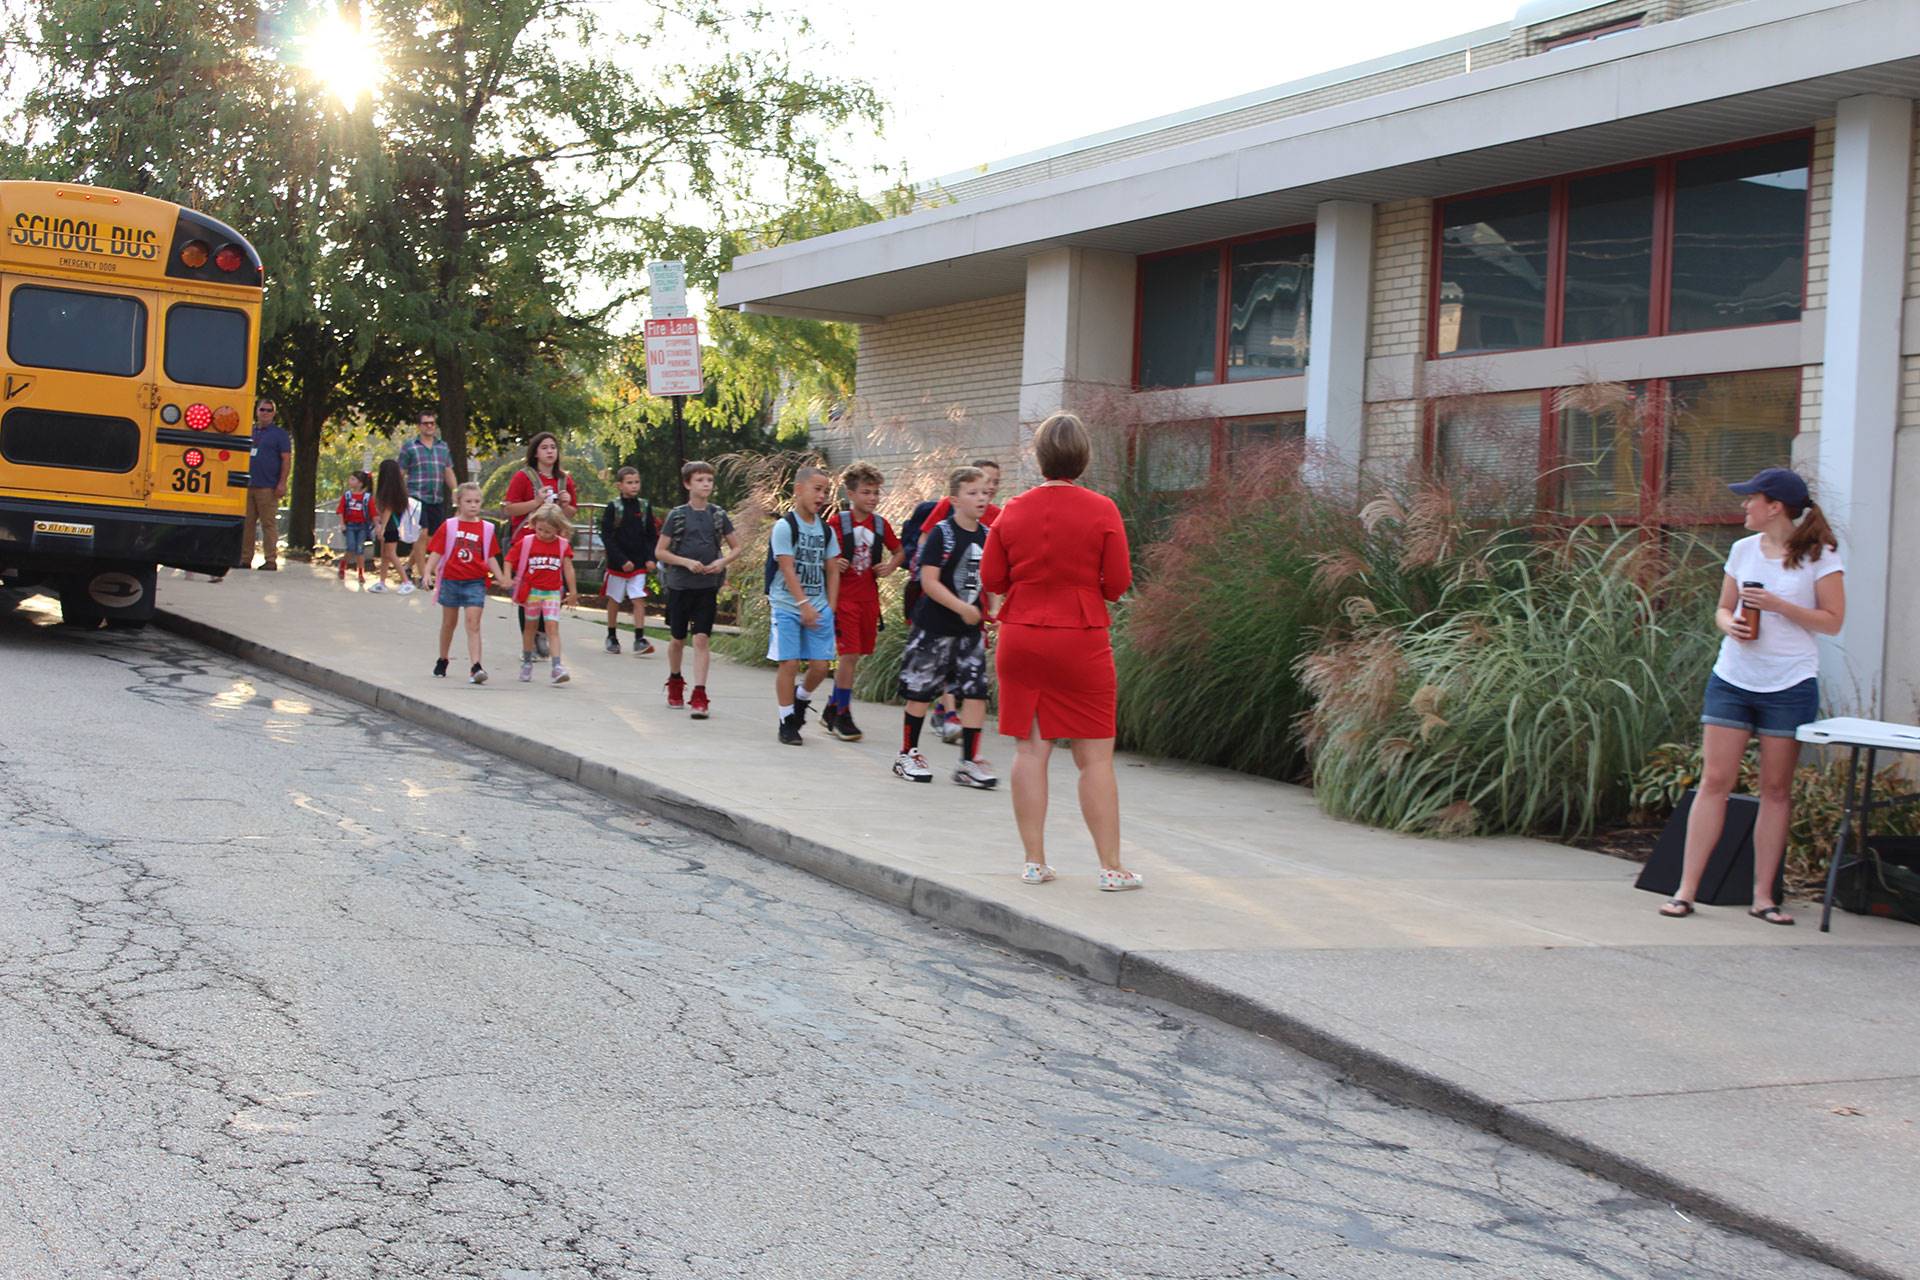 Students walking into West View Elementary School on International Walk to School Day